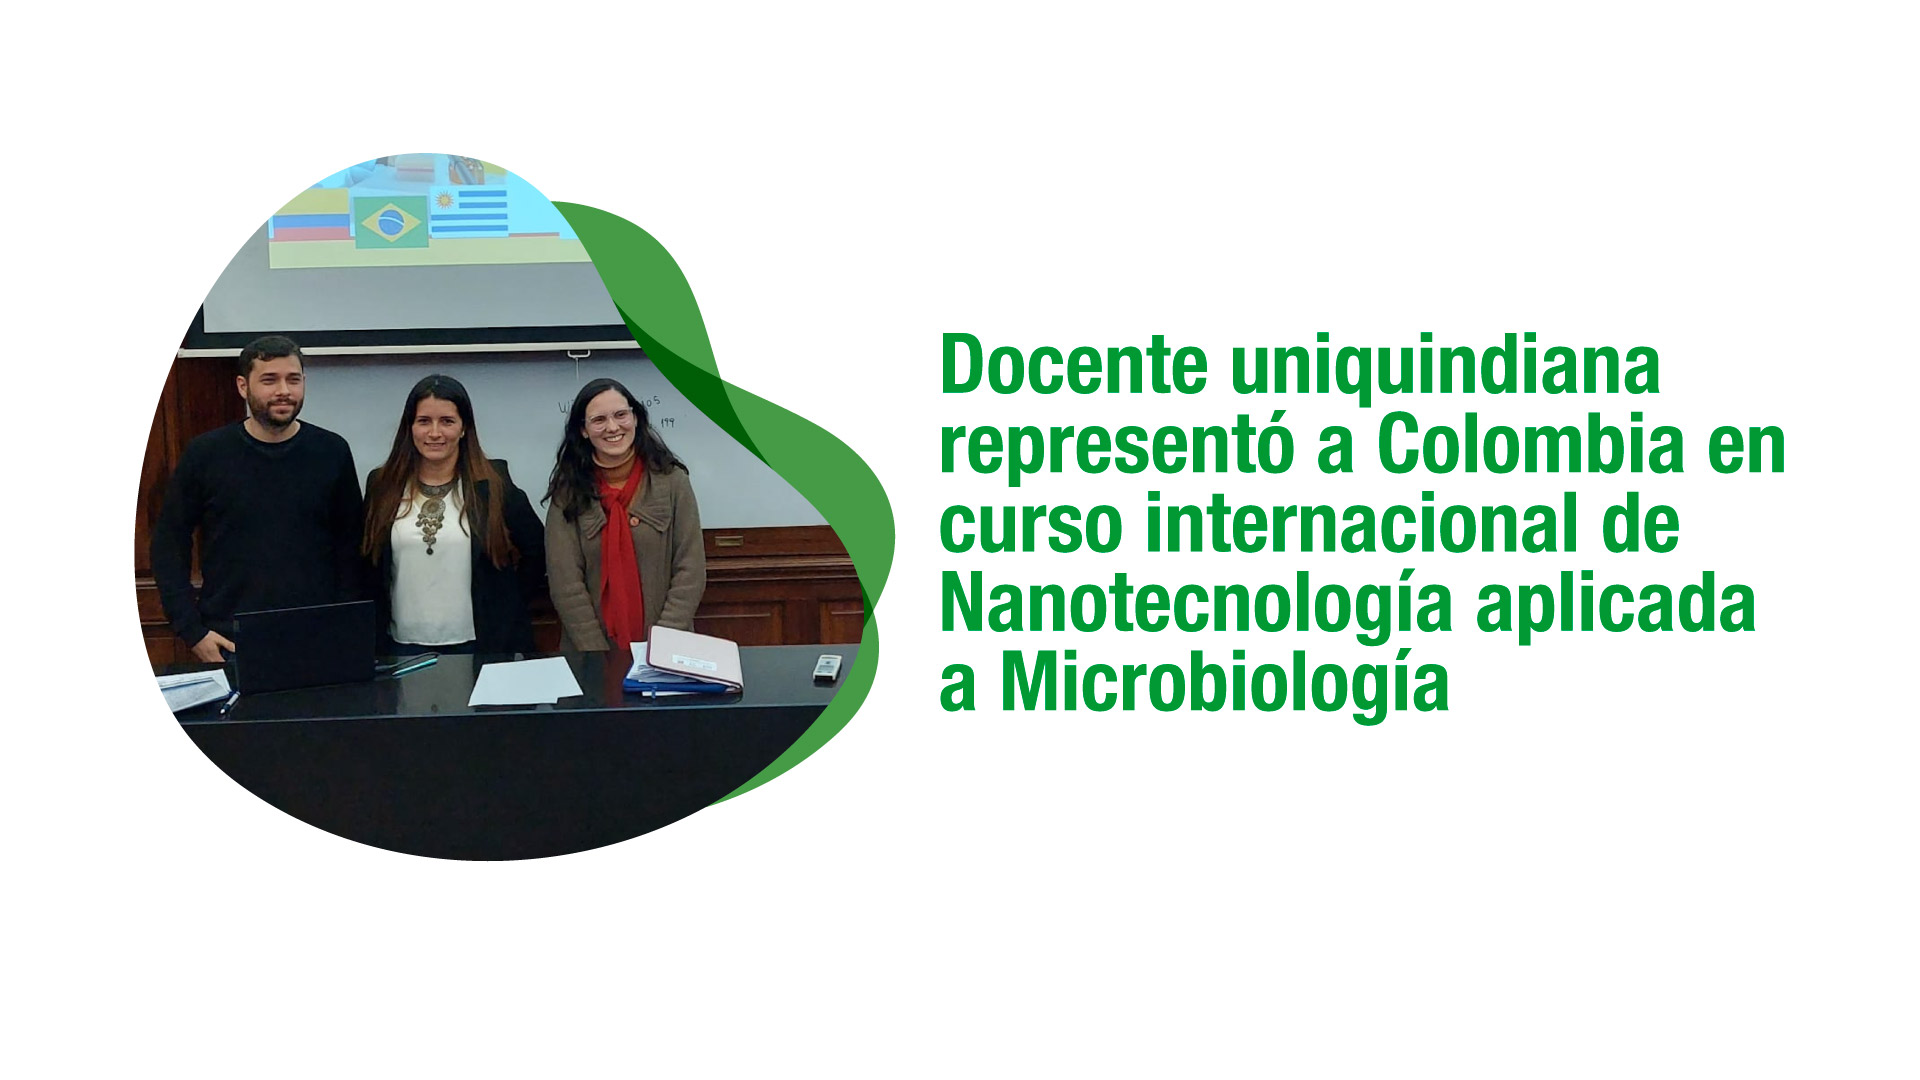 Docente uniquindiana representó a Colombia en curso internacional de Nanotecnología aplicada a Microbiología